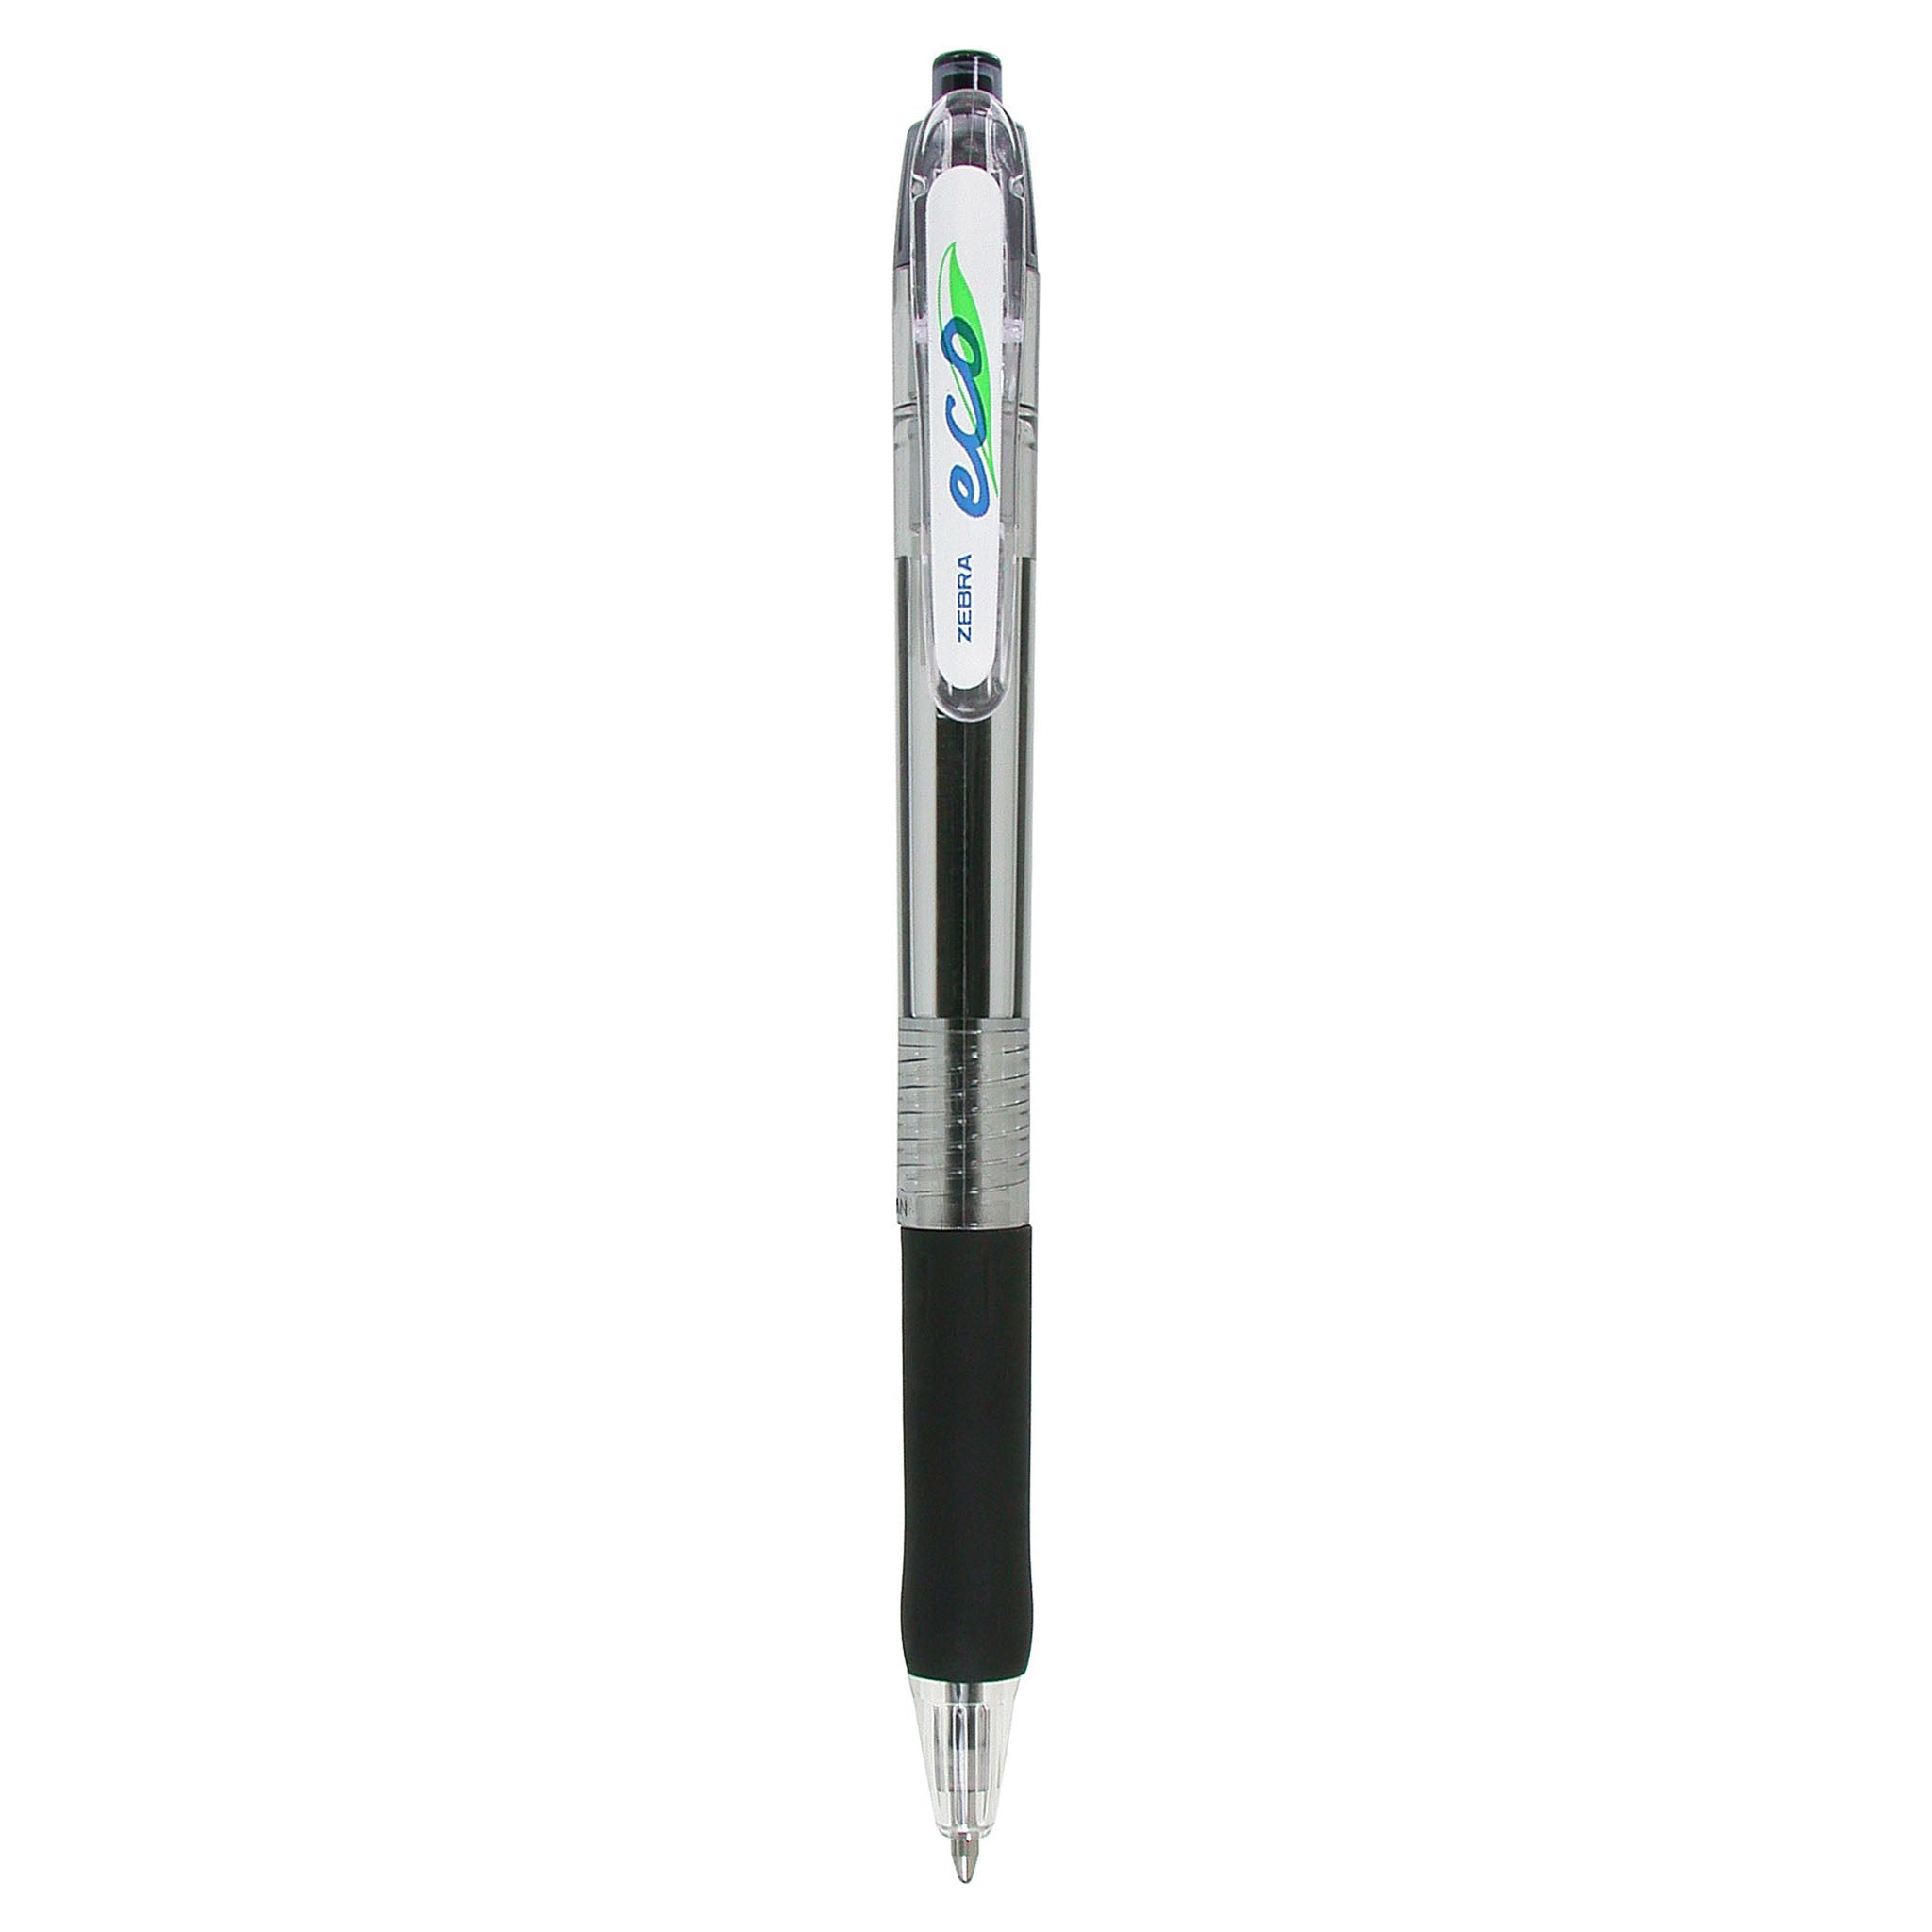 Zebra ECO Ballpoint pen